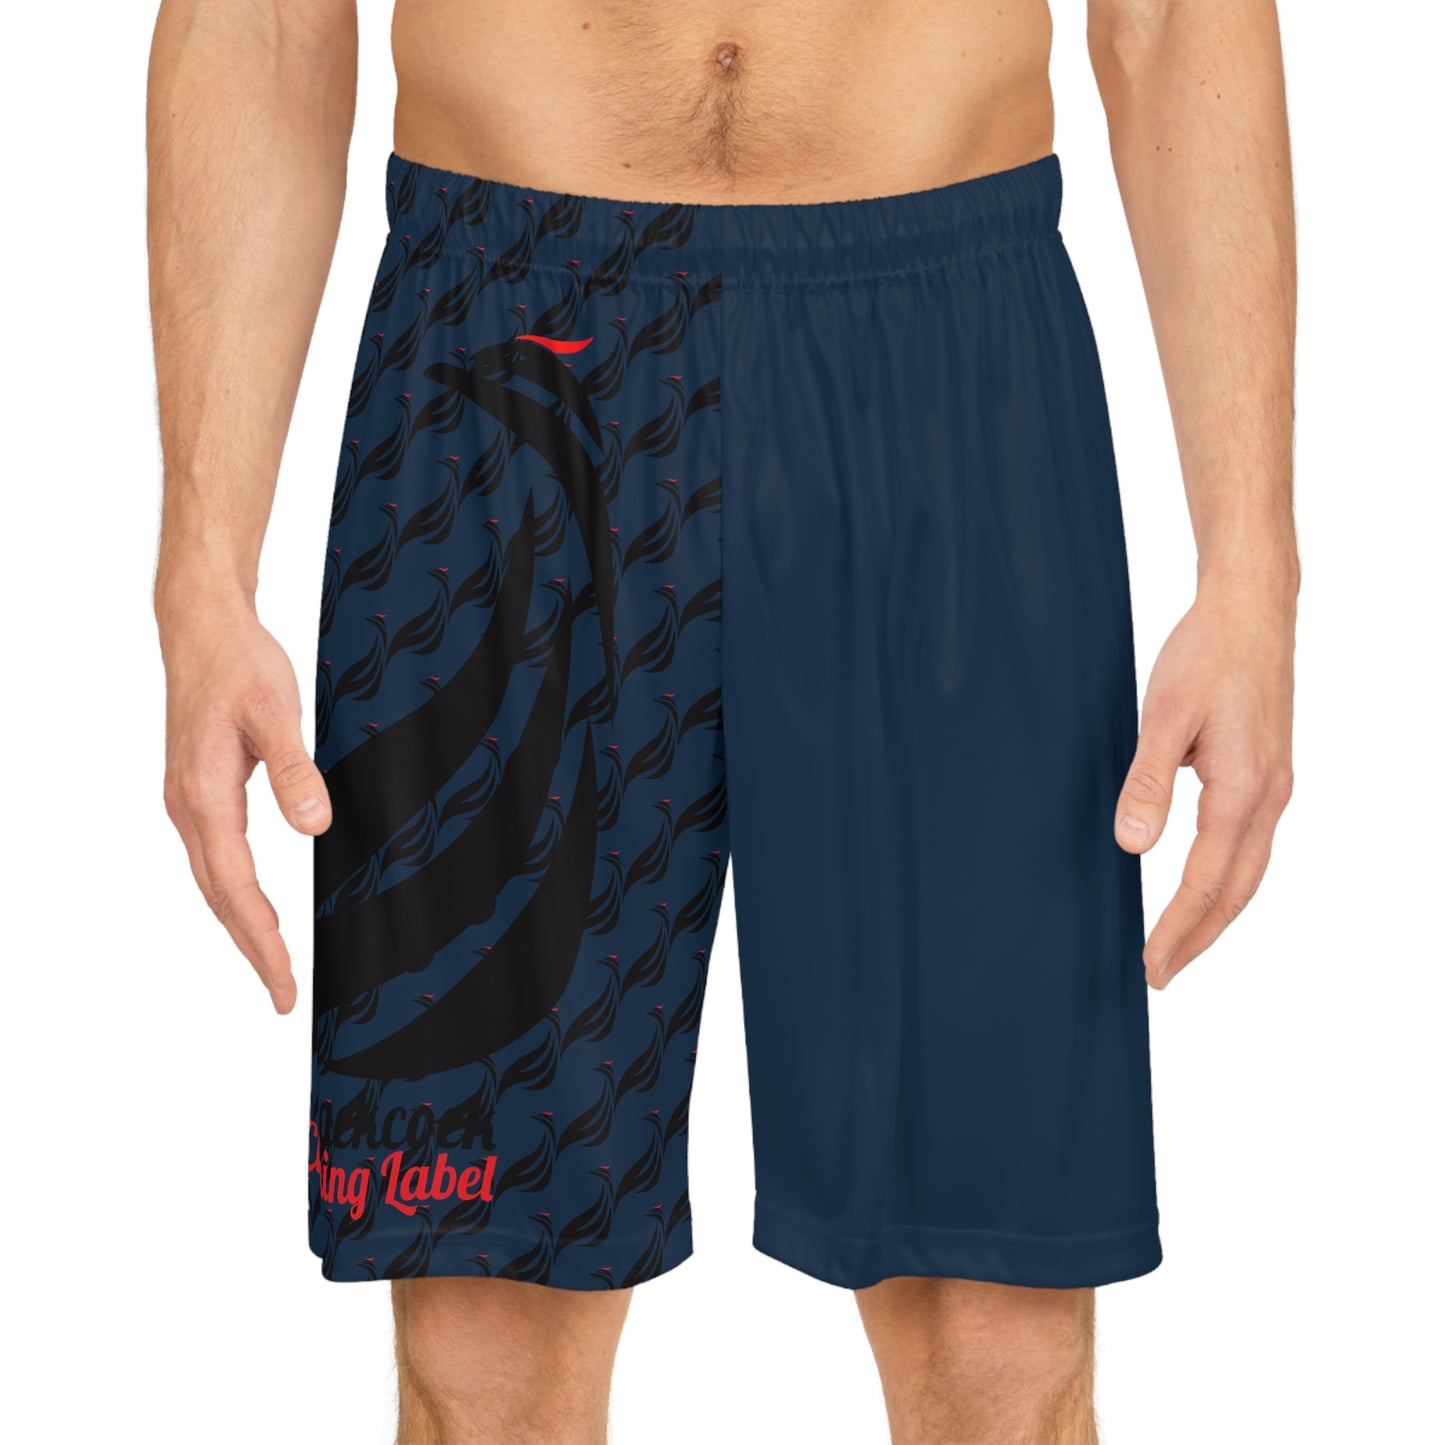 Oxford Blue Court Shorts